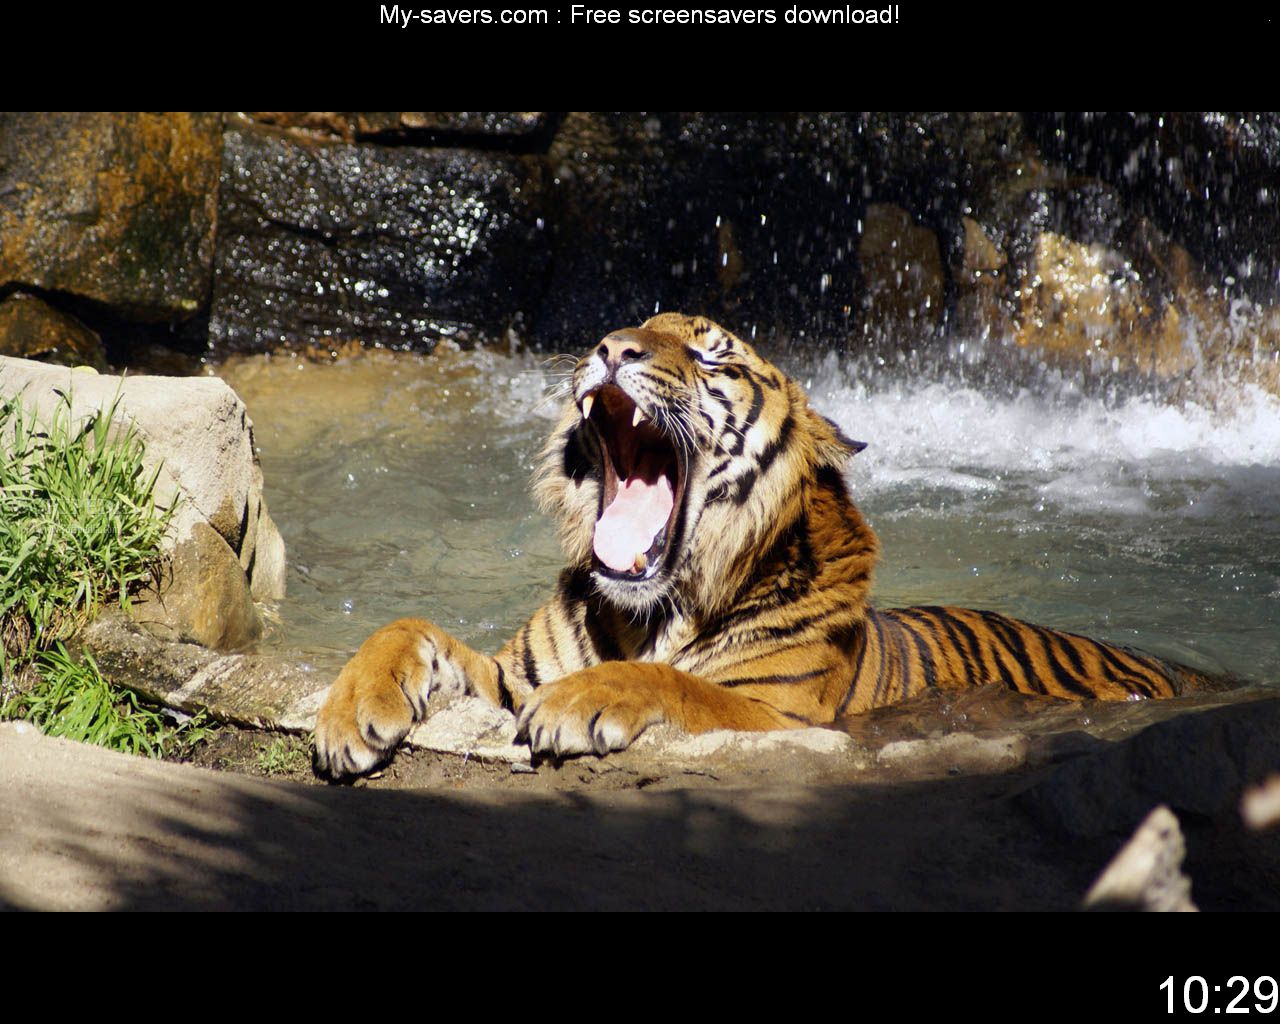 Tiger Pictures Screensaver Screenshot